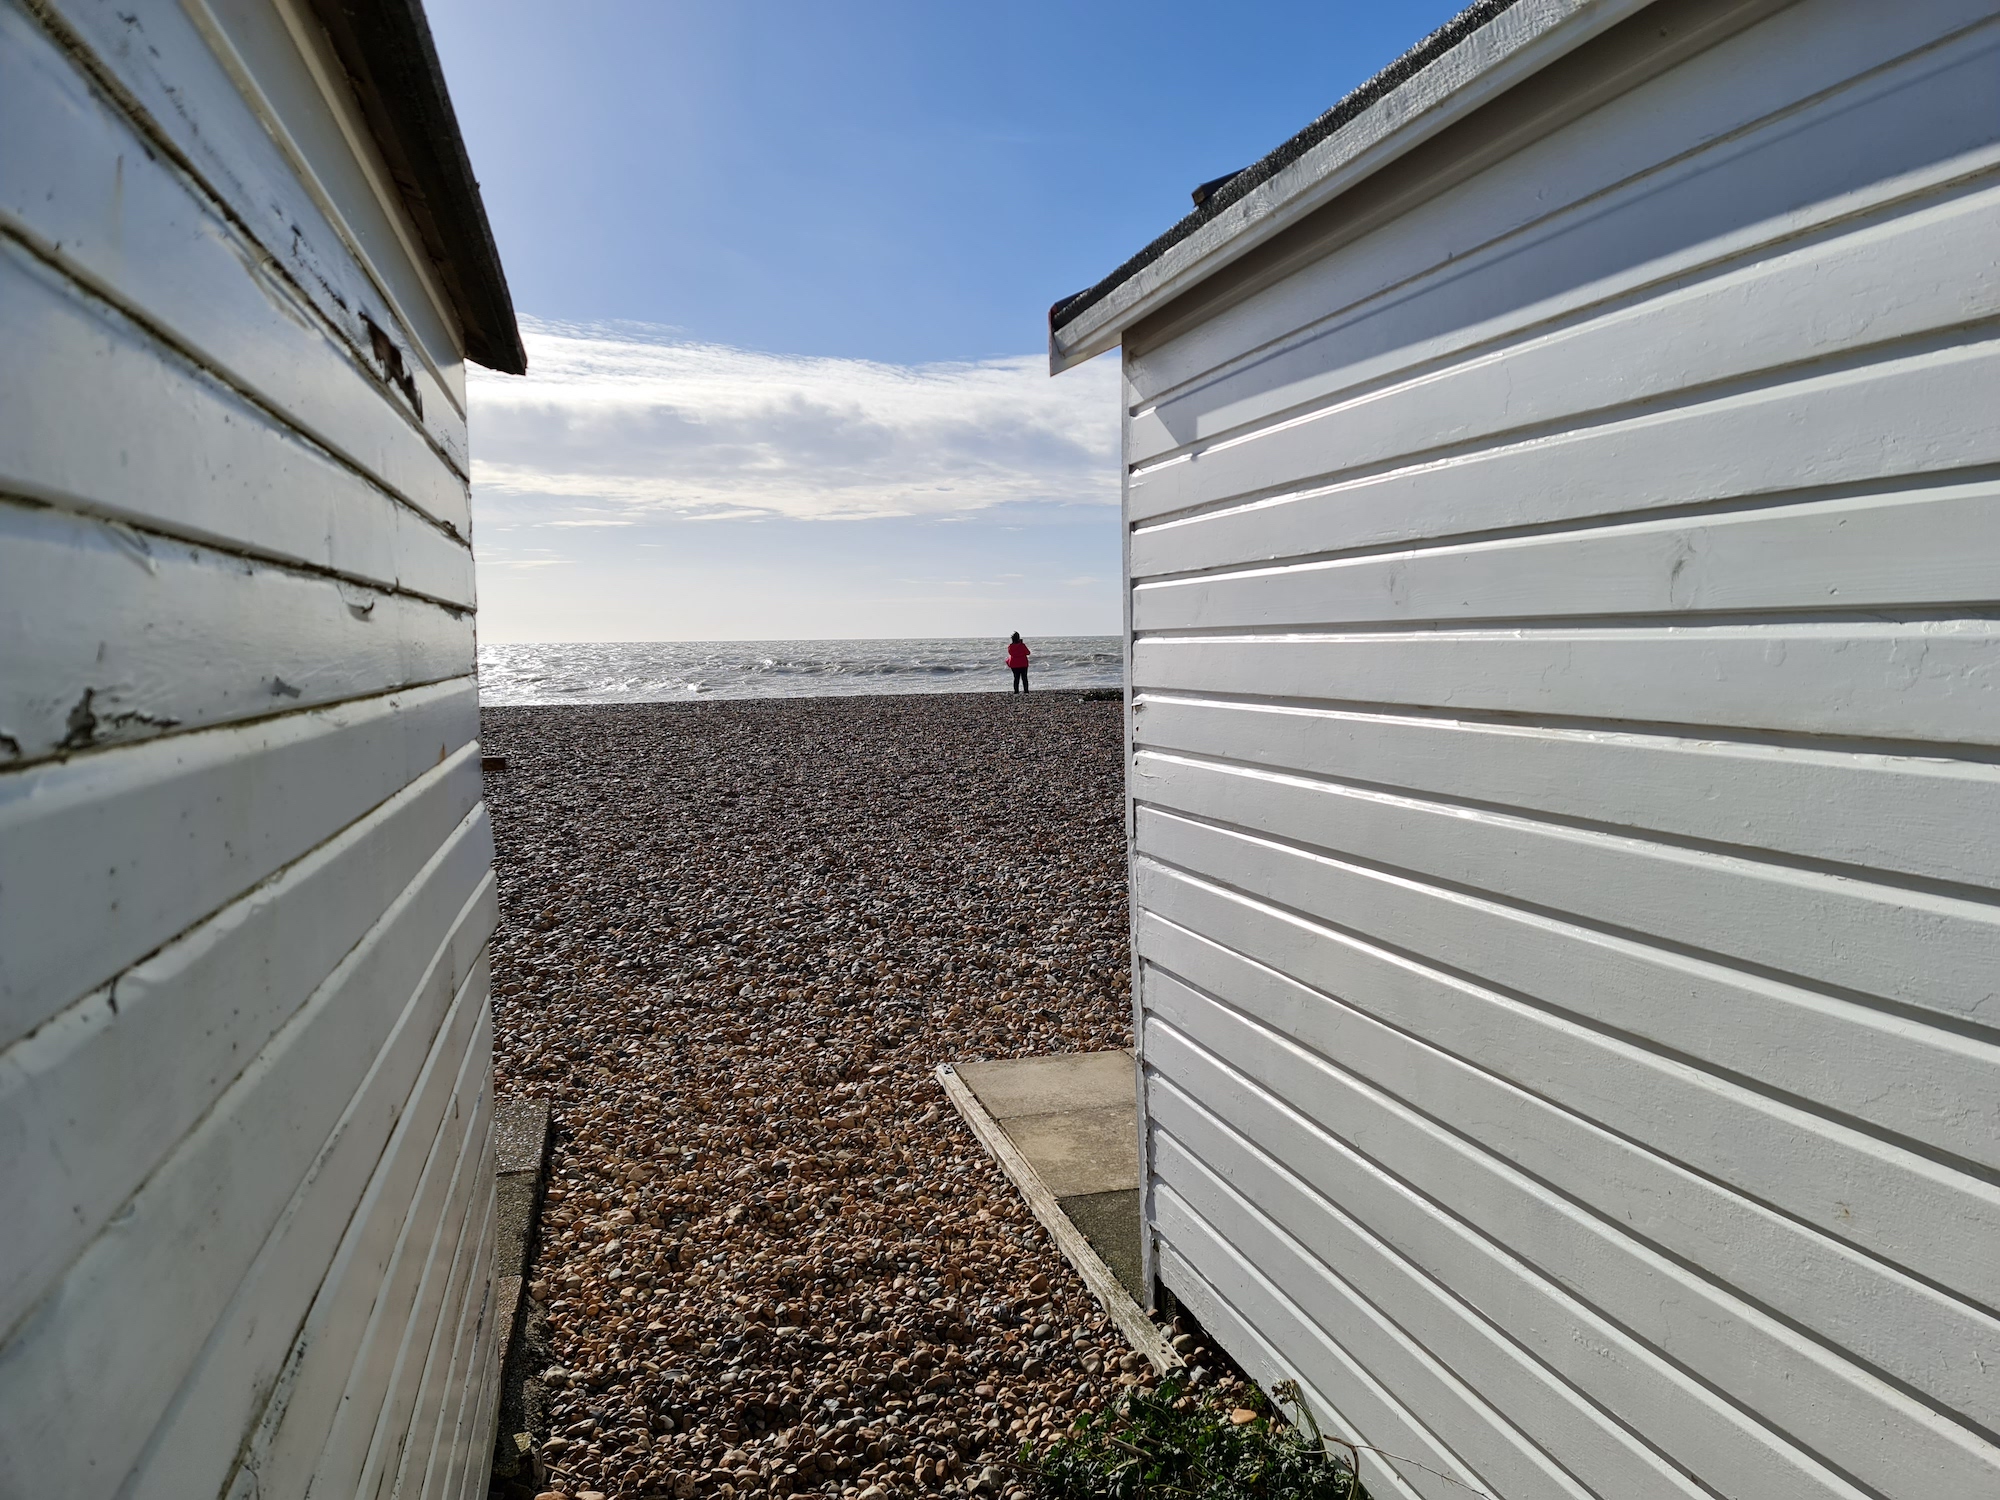 Note 20 Ultra photo of beach huts.